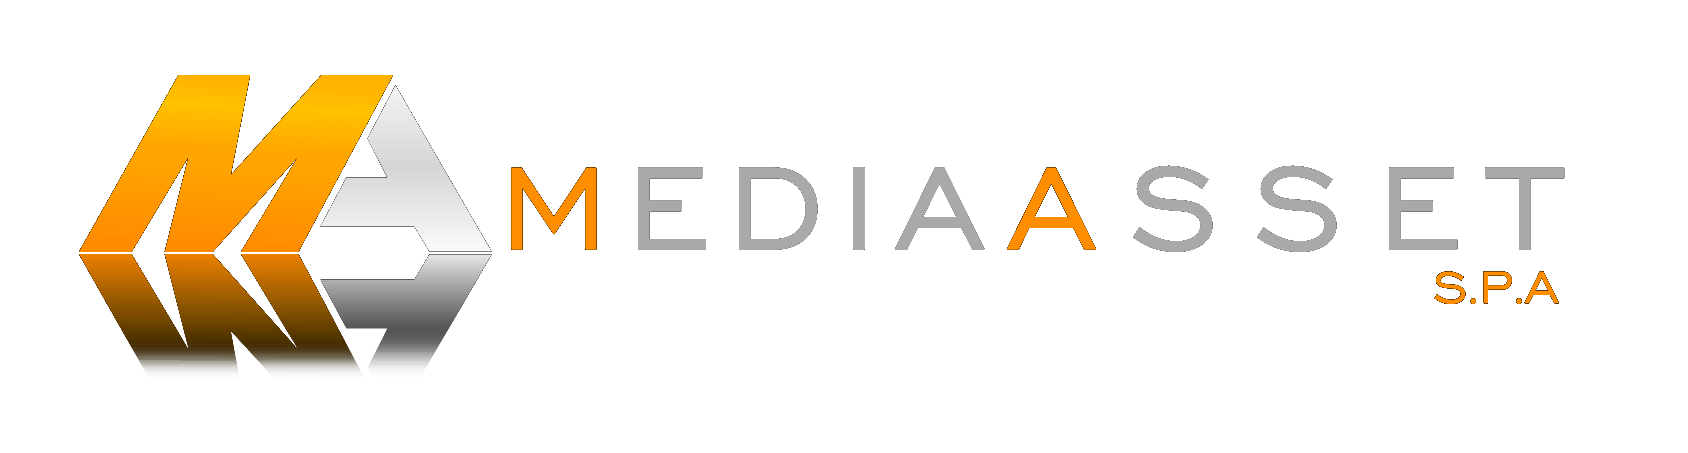 media asset